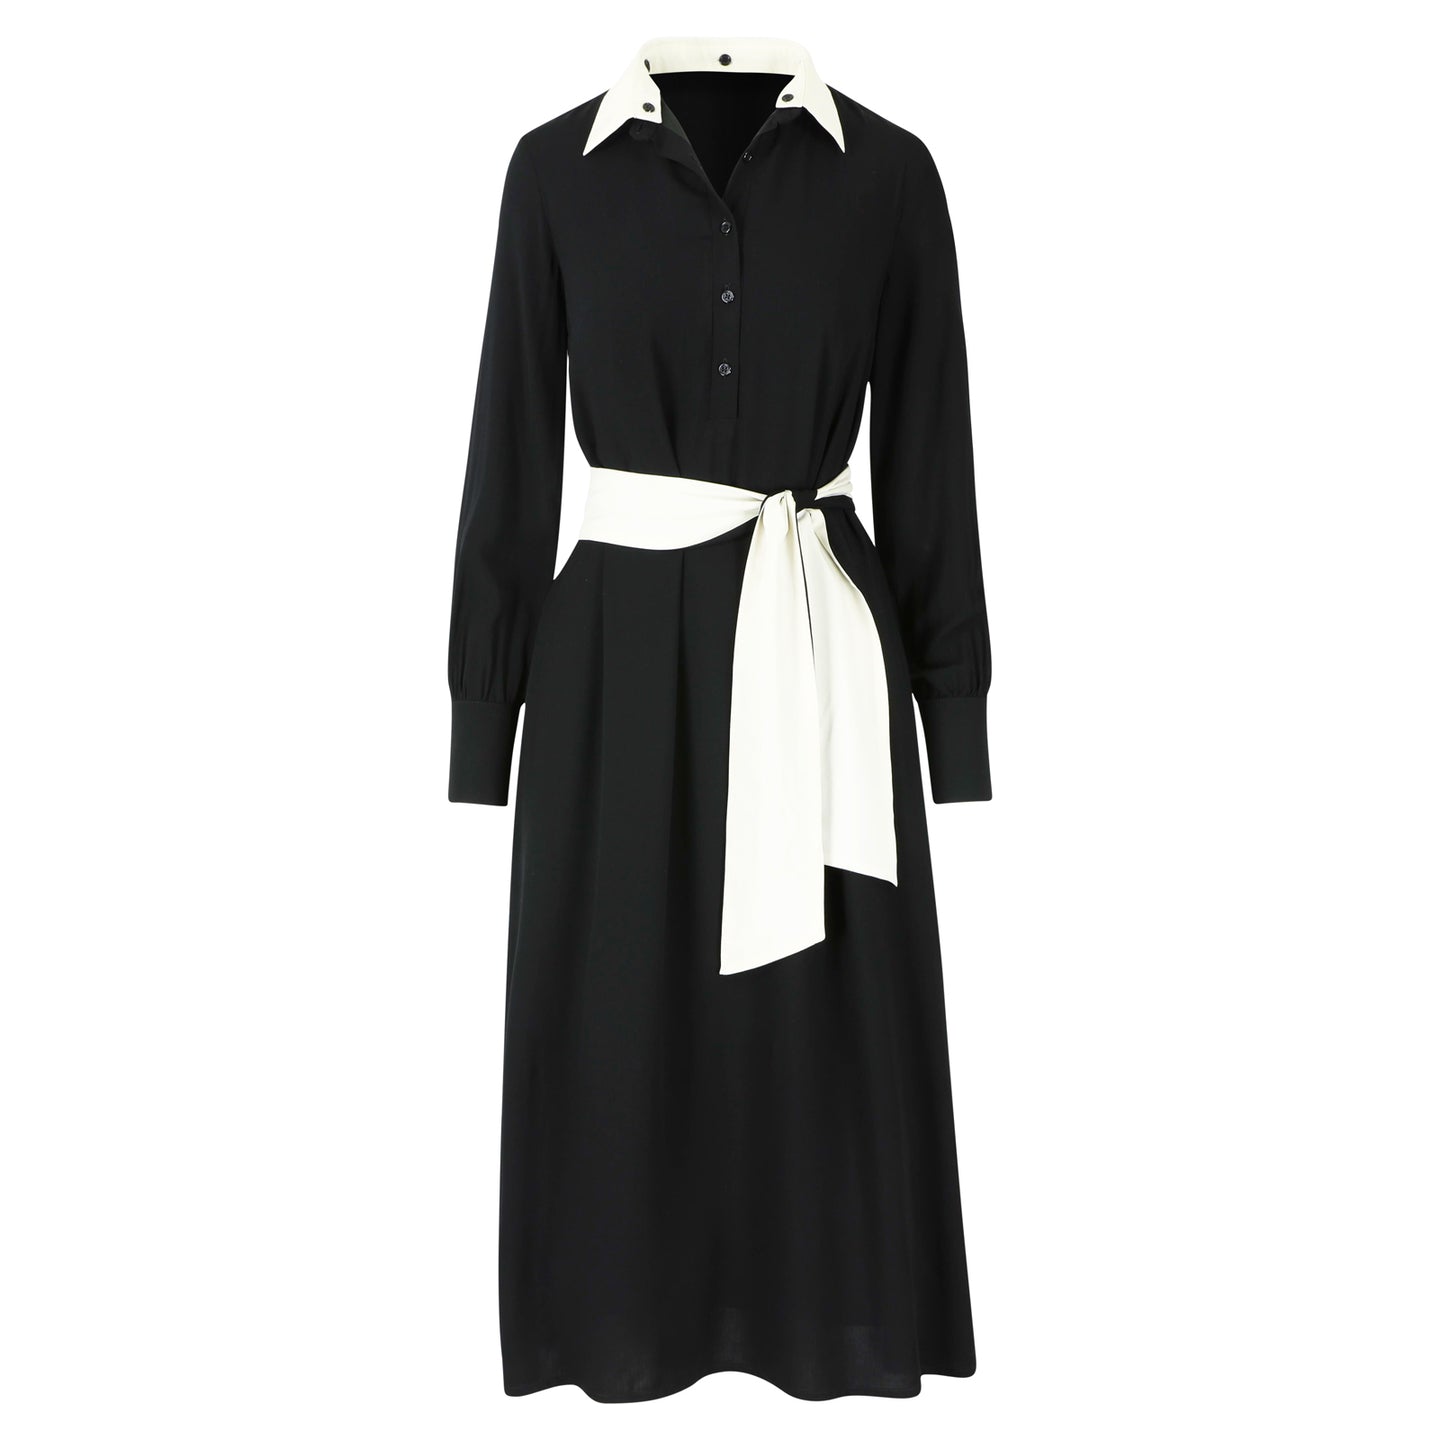 Polly Jean Dress Black - Last size: 44